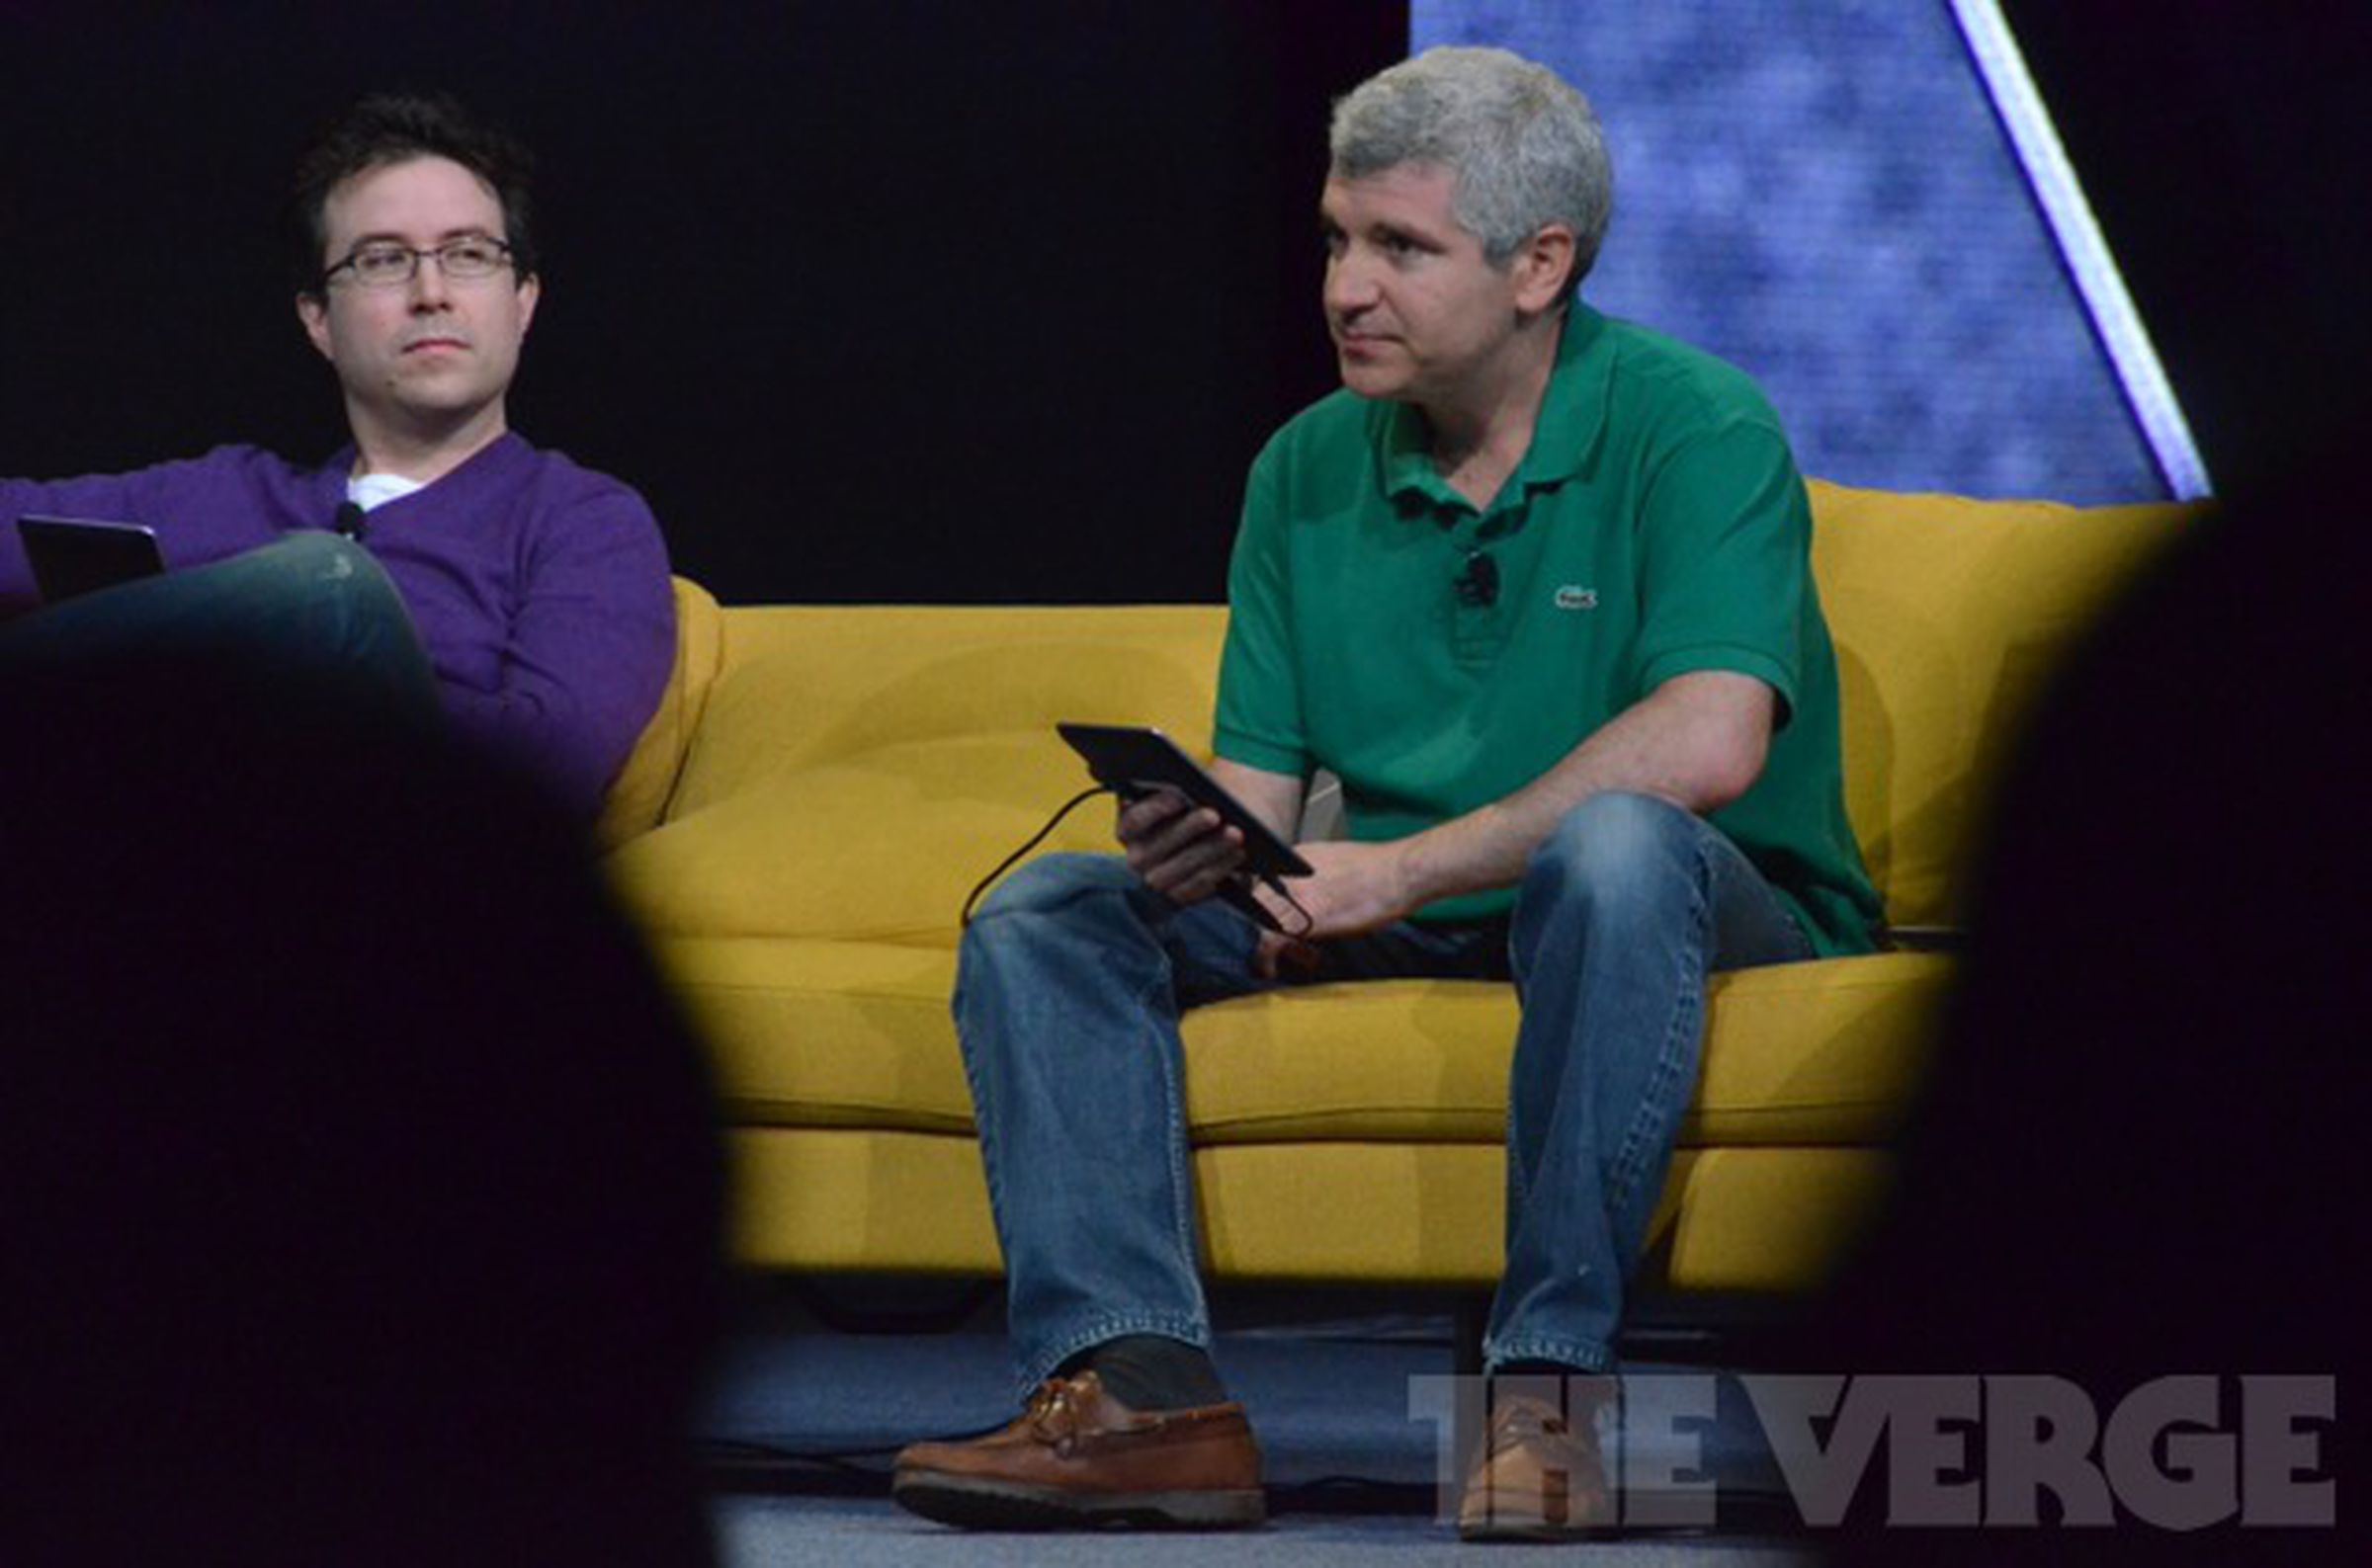 Photos of new Nexus Q from Google I/O 2012